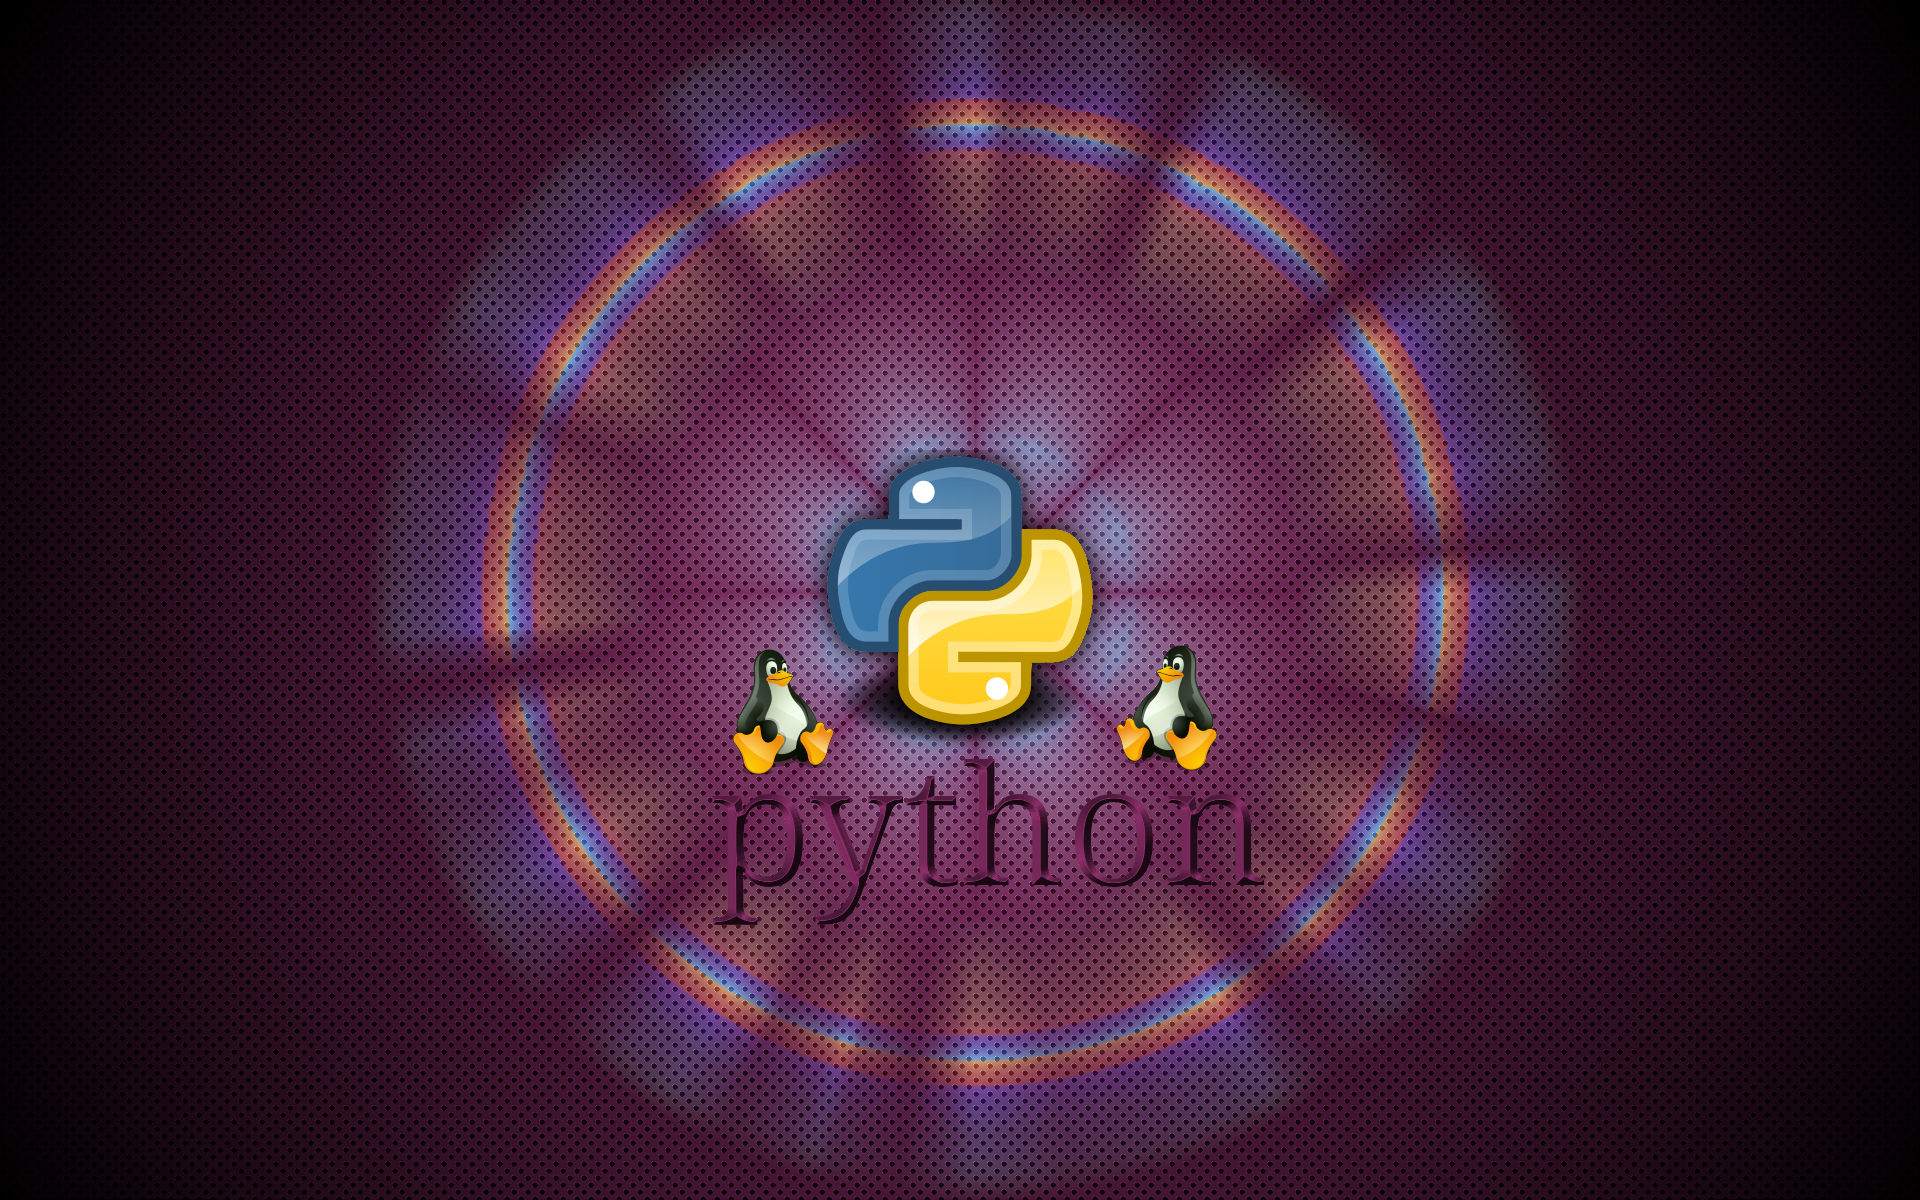 Python Programming Wallpaper 72 images